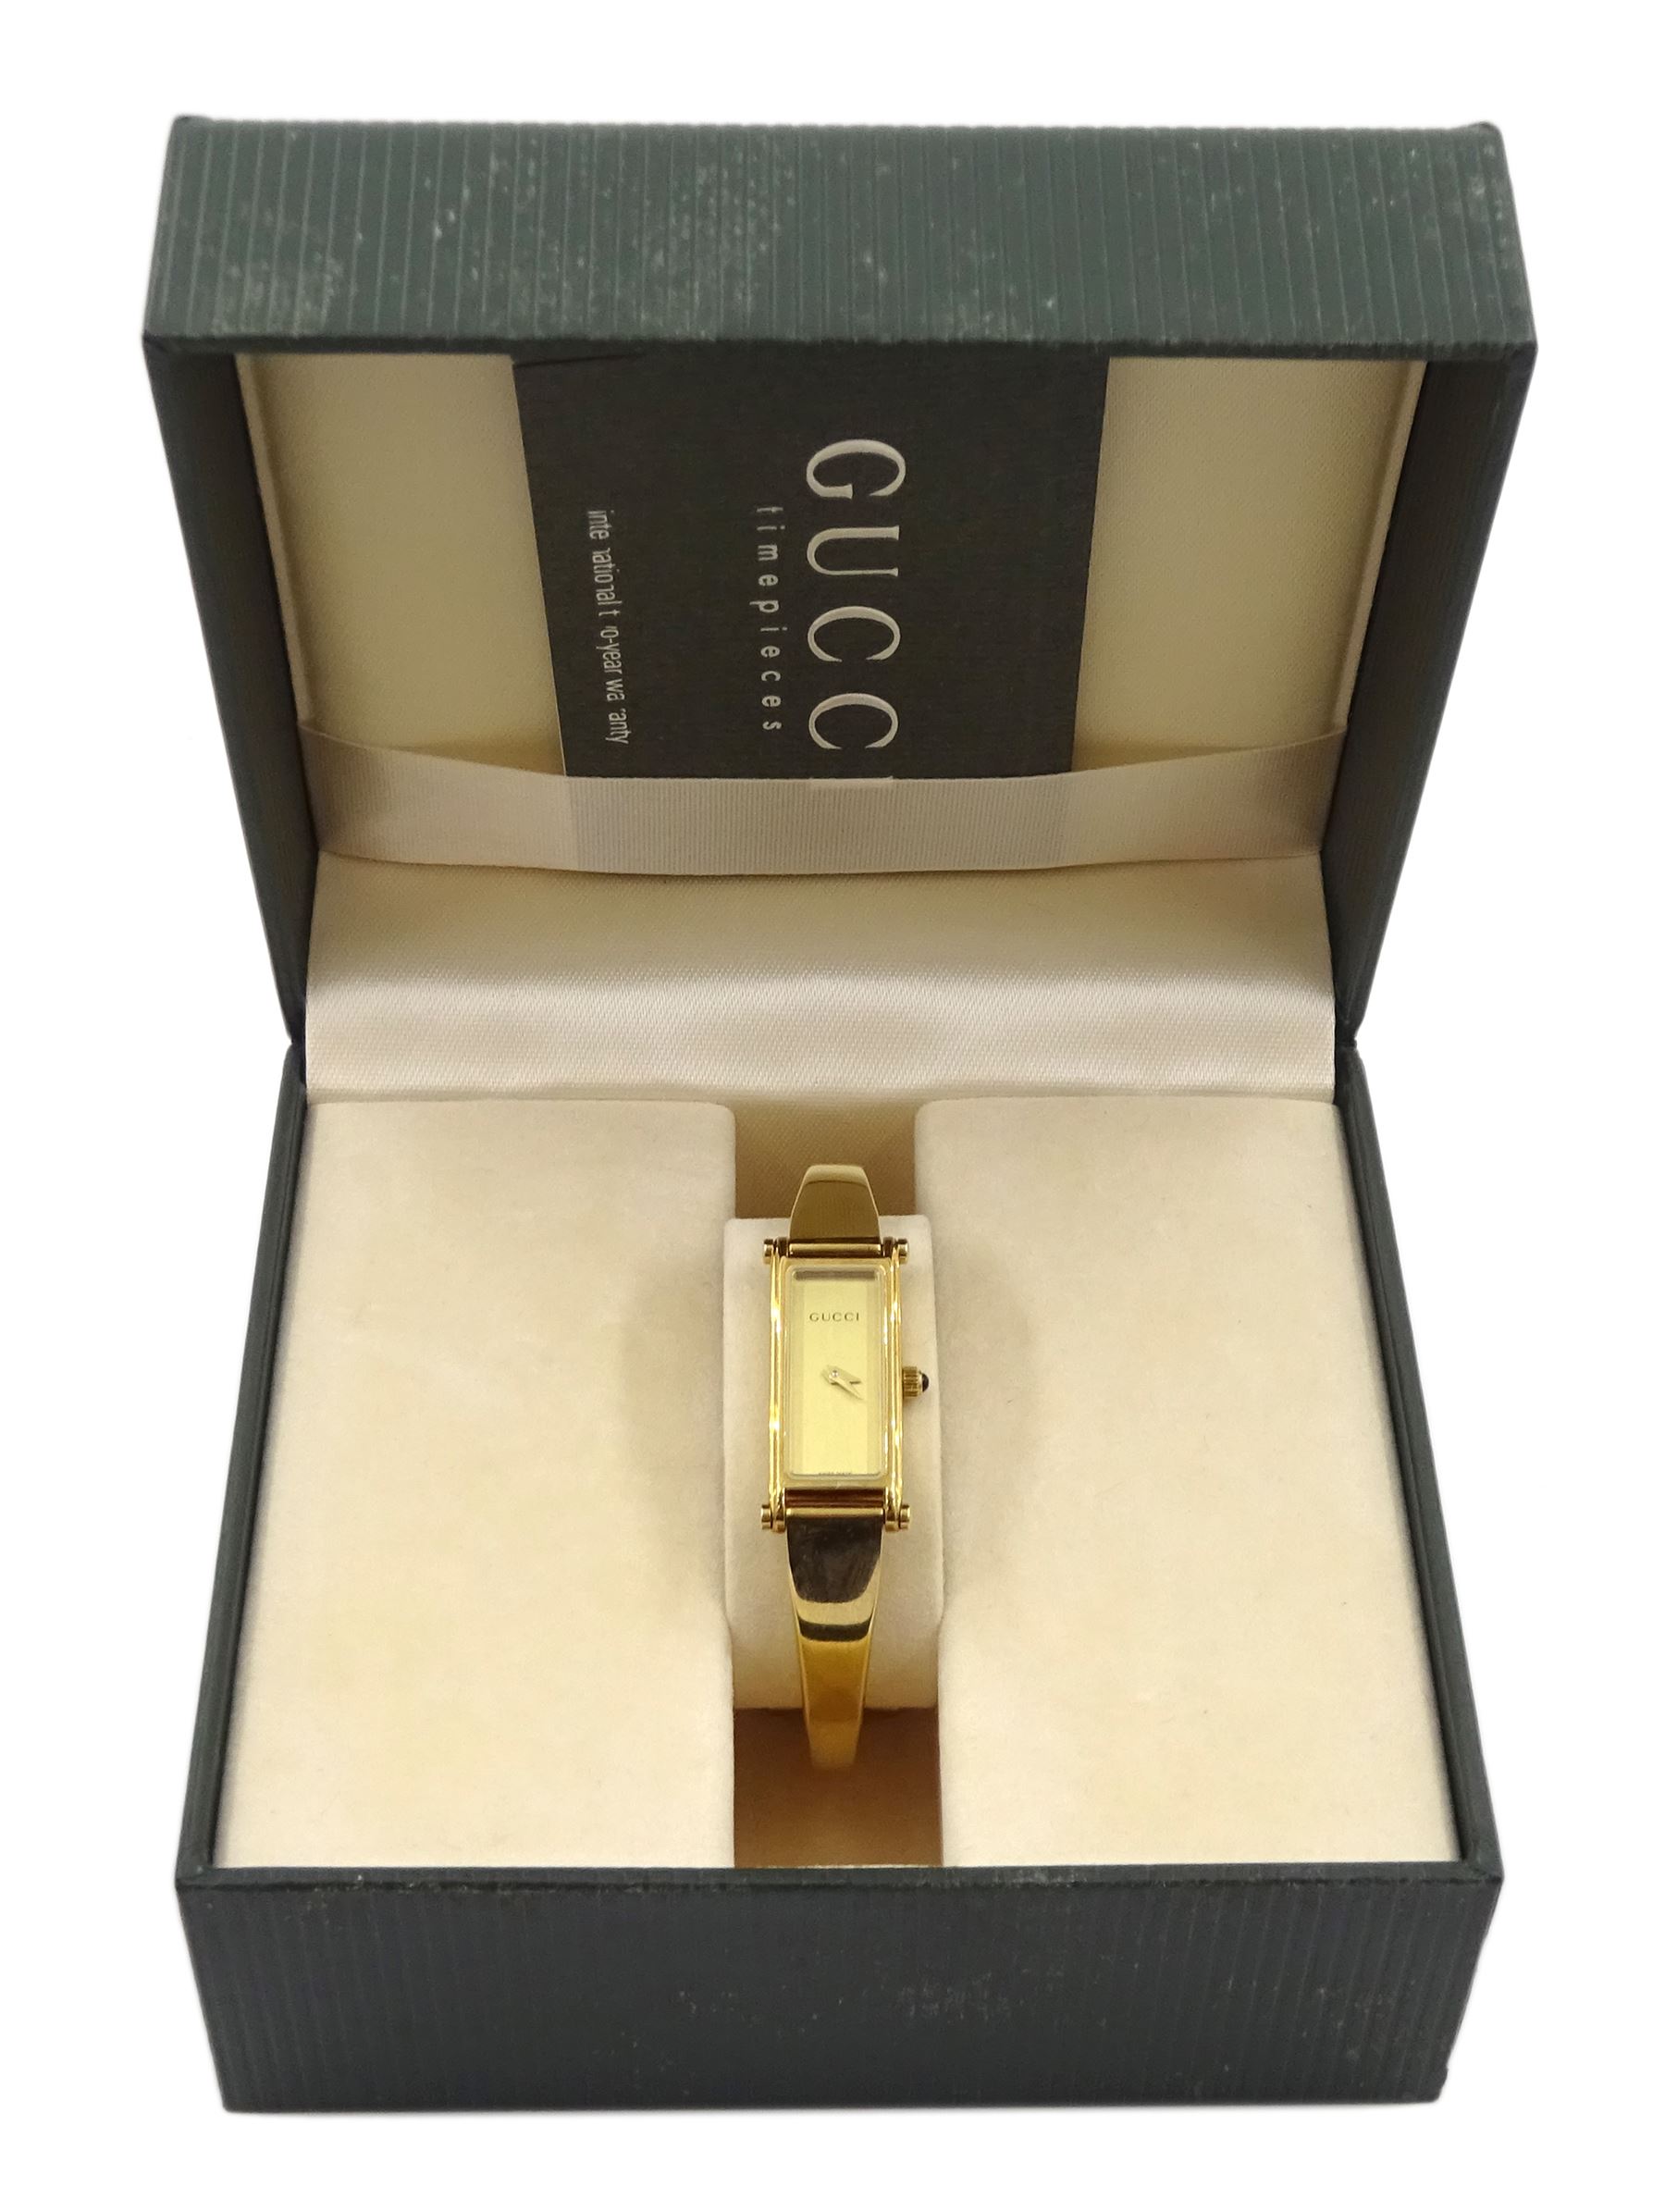 Gucci gold-plated ladies quartz wristwatch - Image 2 of 5